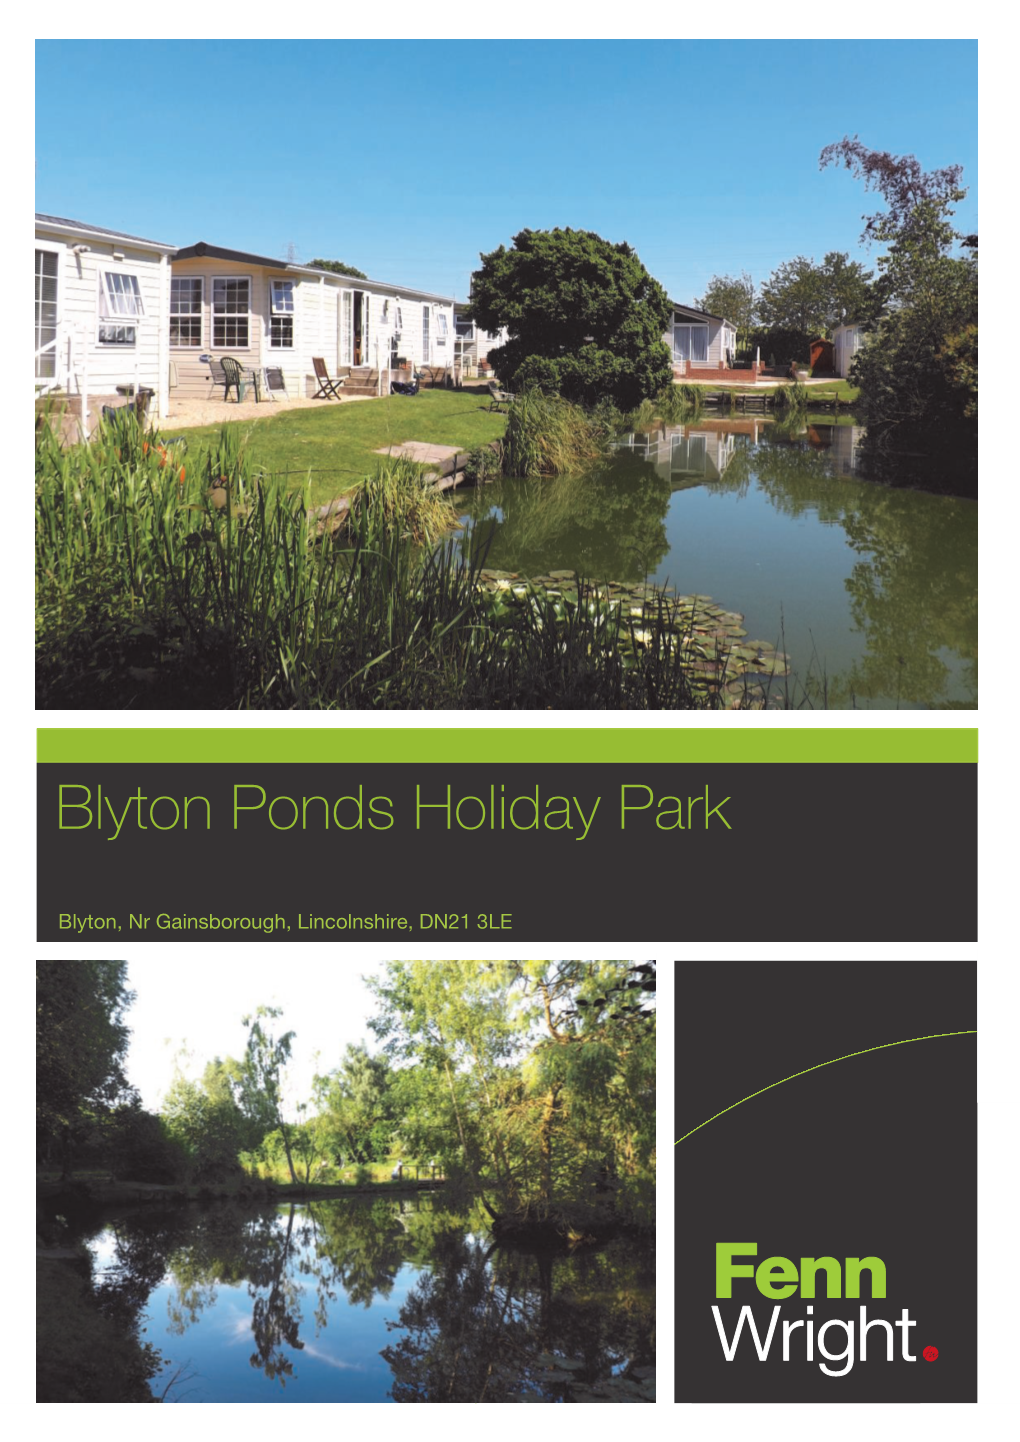 Blyton Ponds Holiday Park